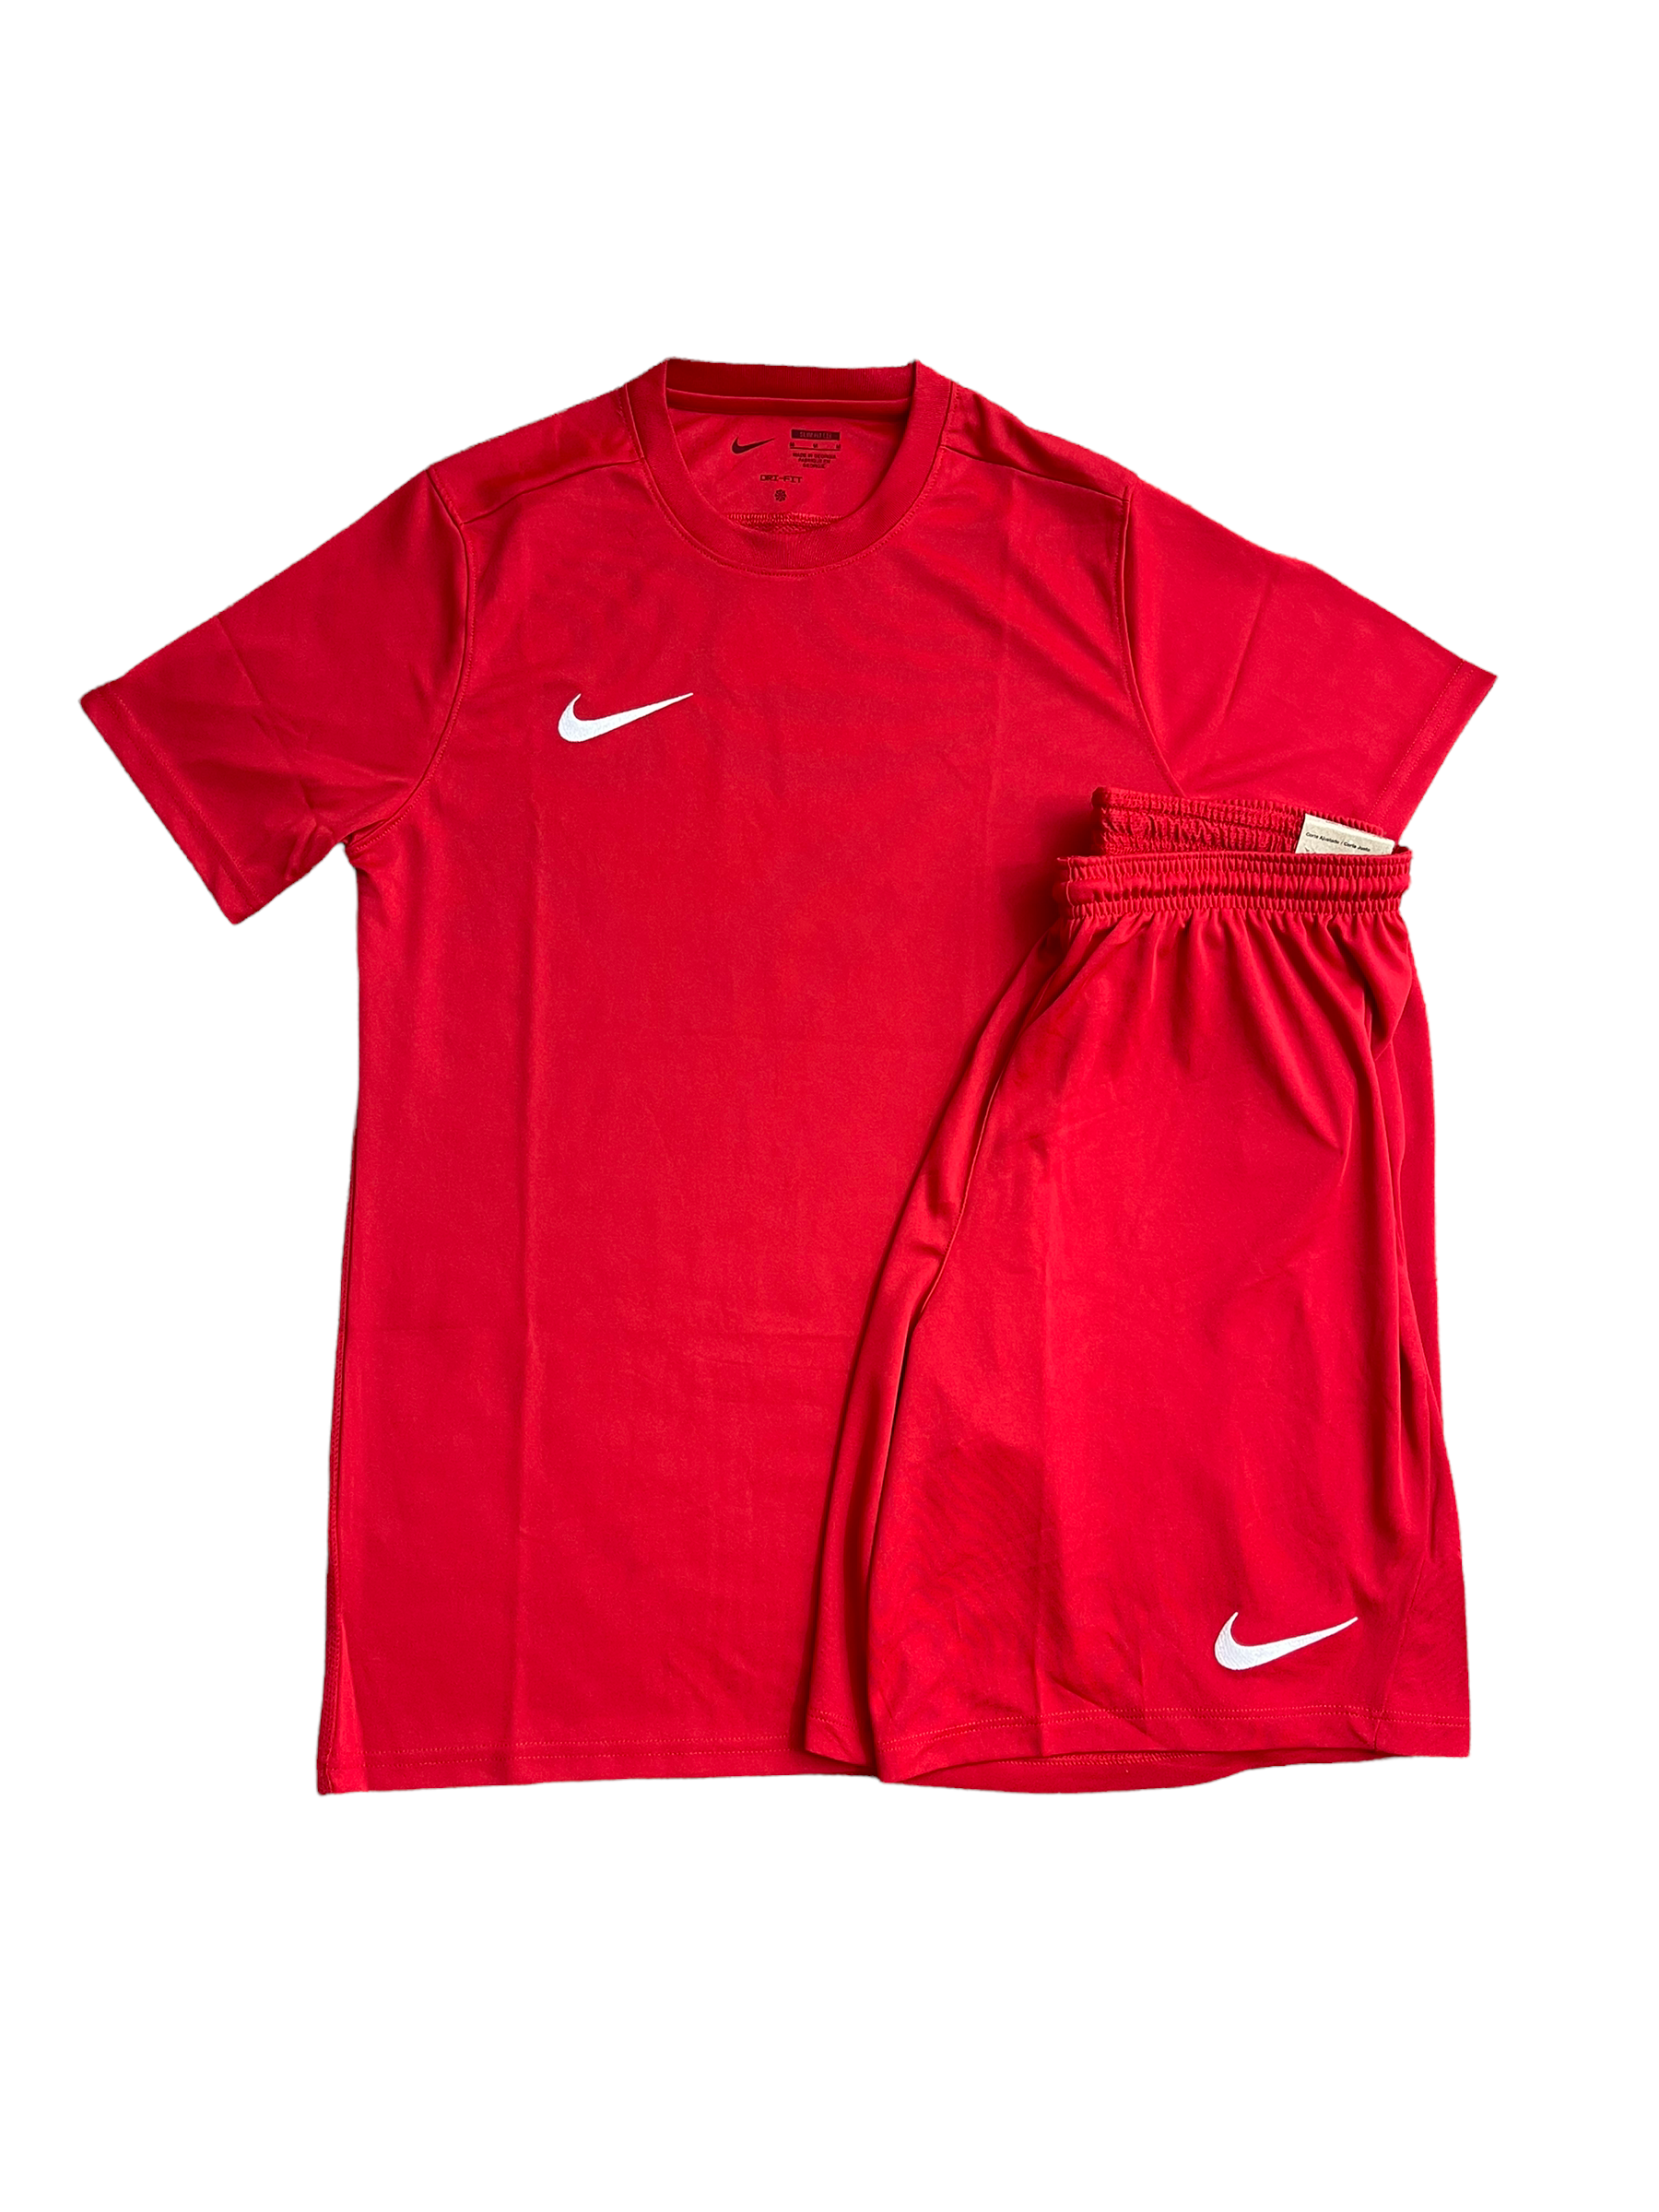 NIKE DRI - FIT FULL SET - UNIVERSITY RED – SGN CLOTHING